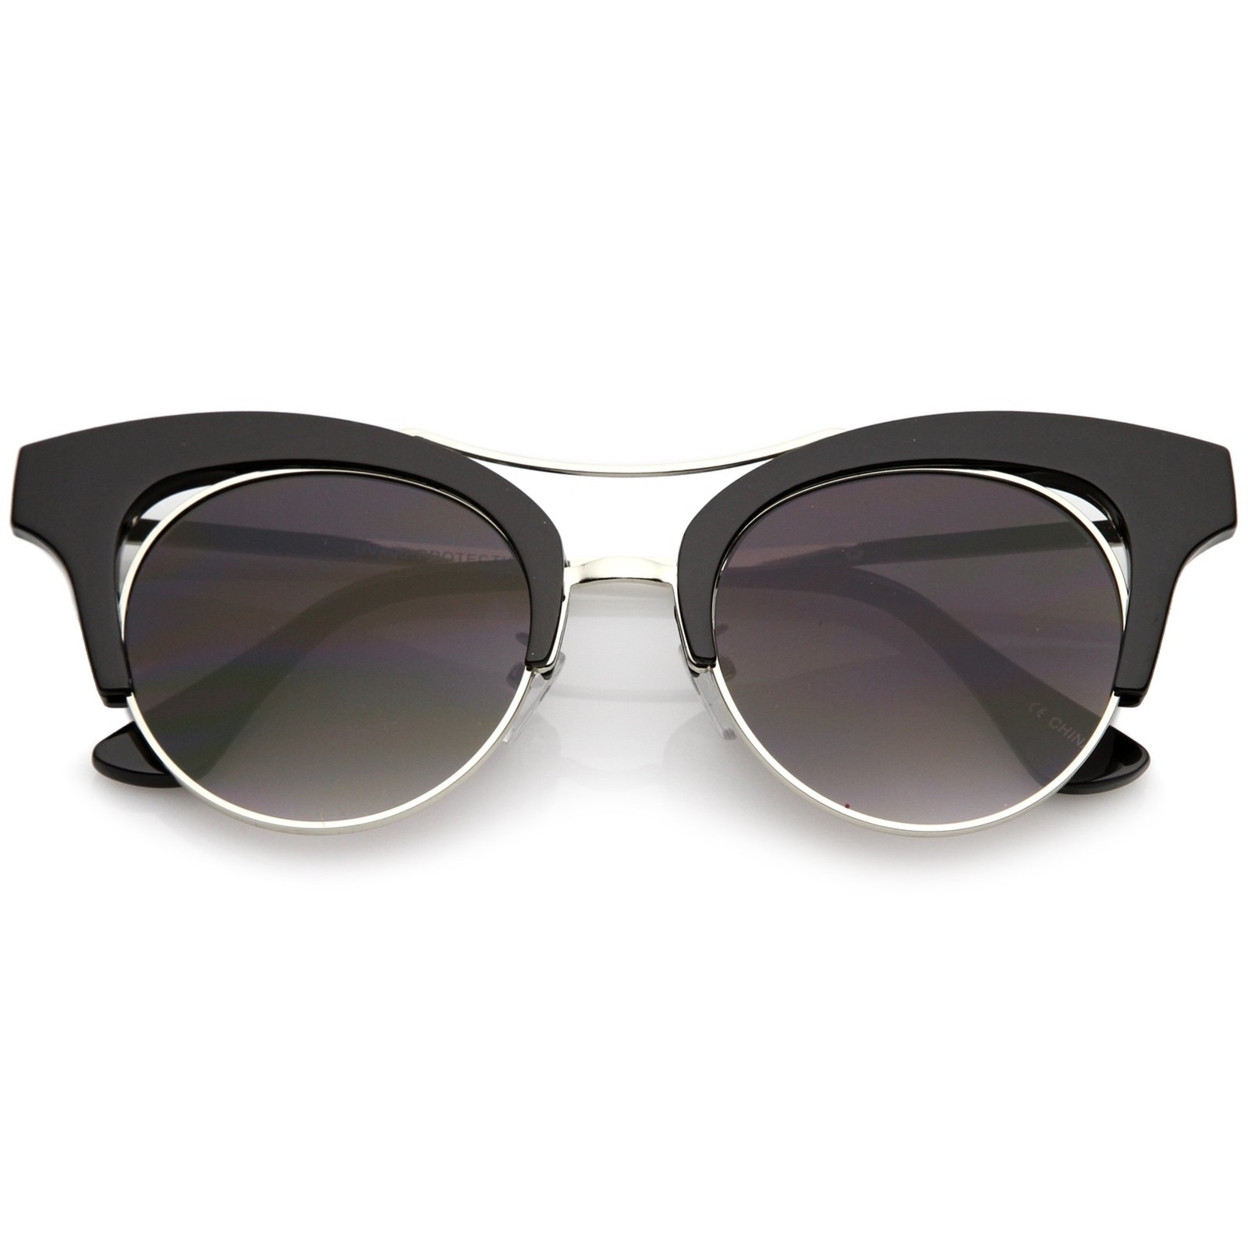 Women's Oversize Cutout Metal Brow Bar Round Flat Lens Cat Eye Sunglasses 51mm - Black-Gold / Smoke